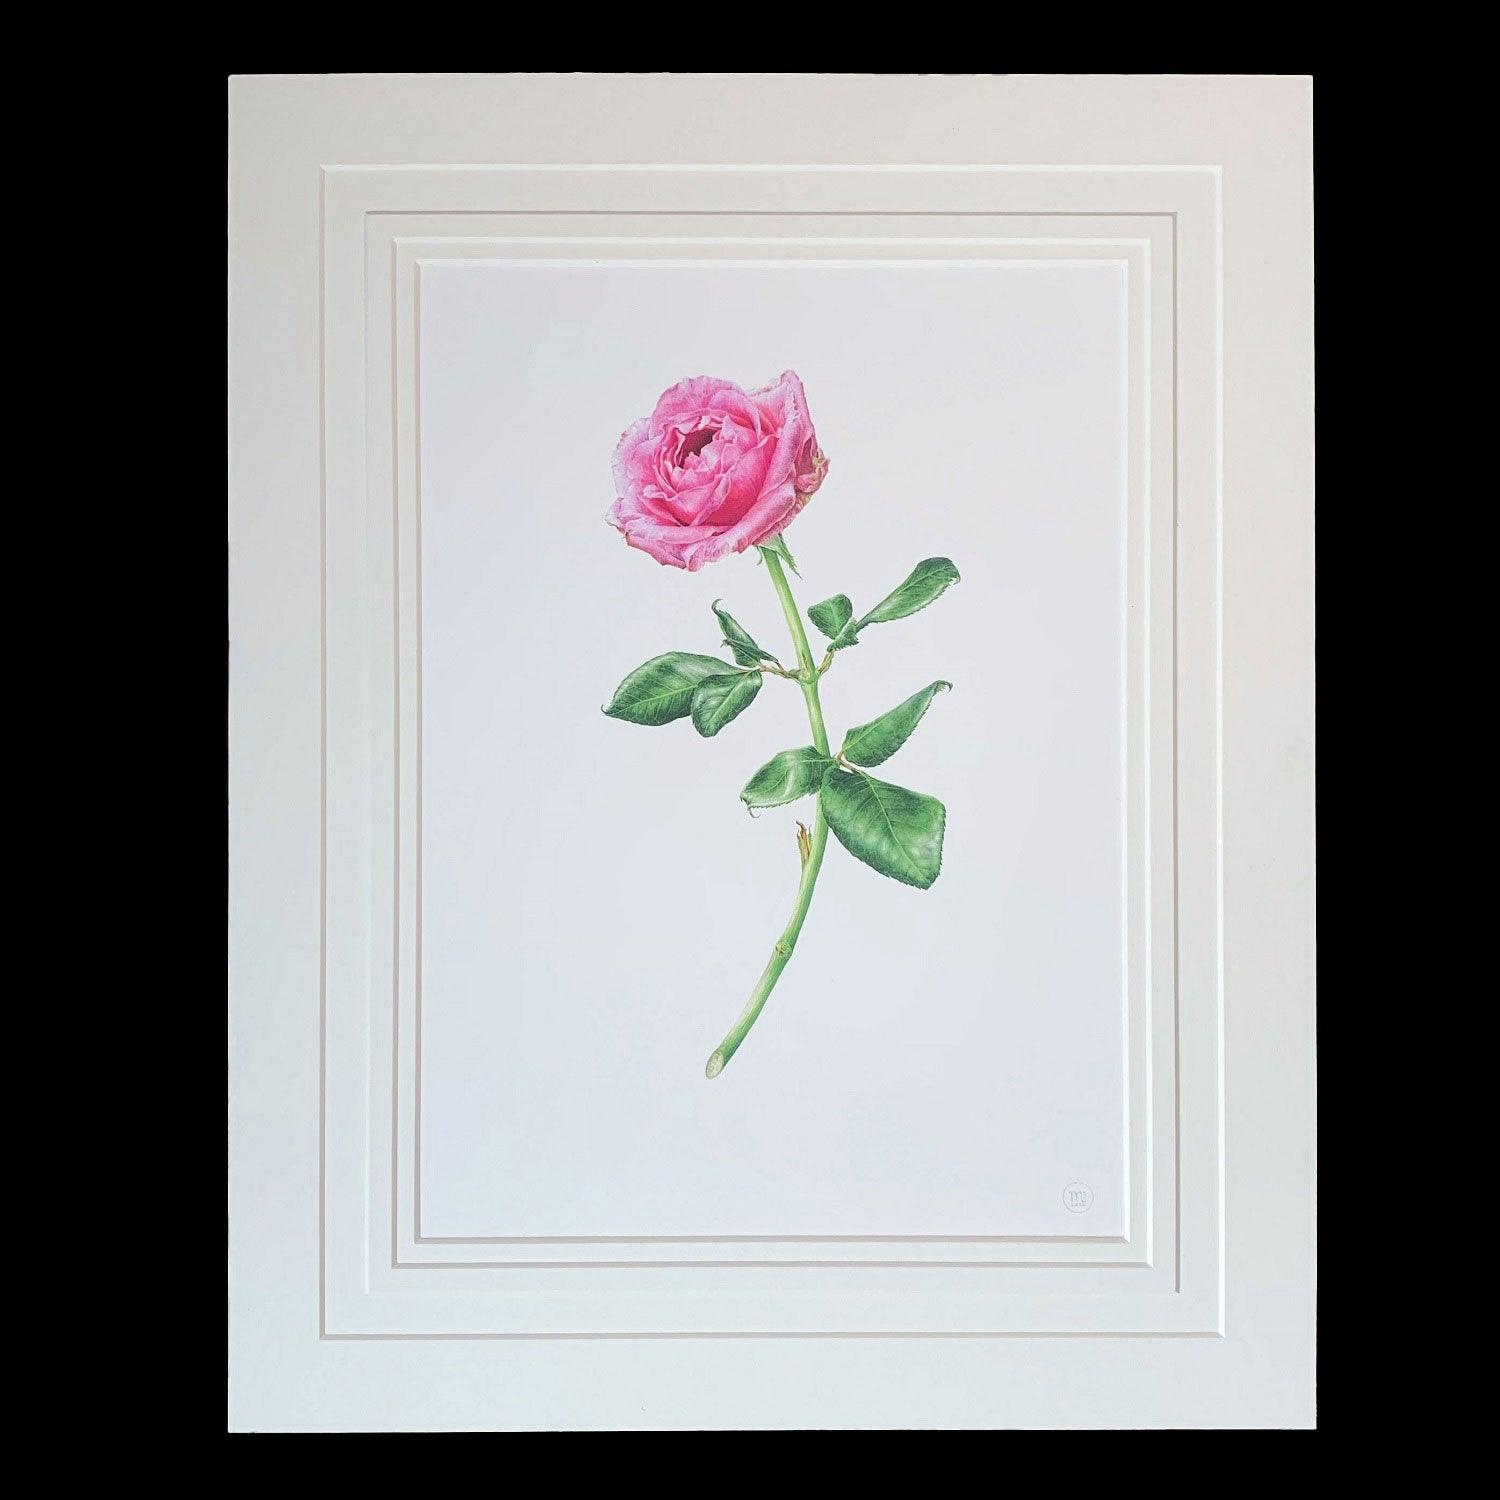 Limited Edition Print "Pink Rose" - Michael Michaud Jewellery